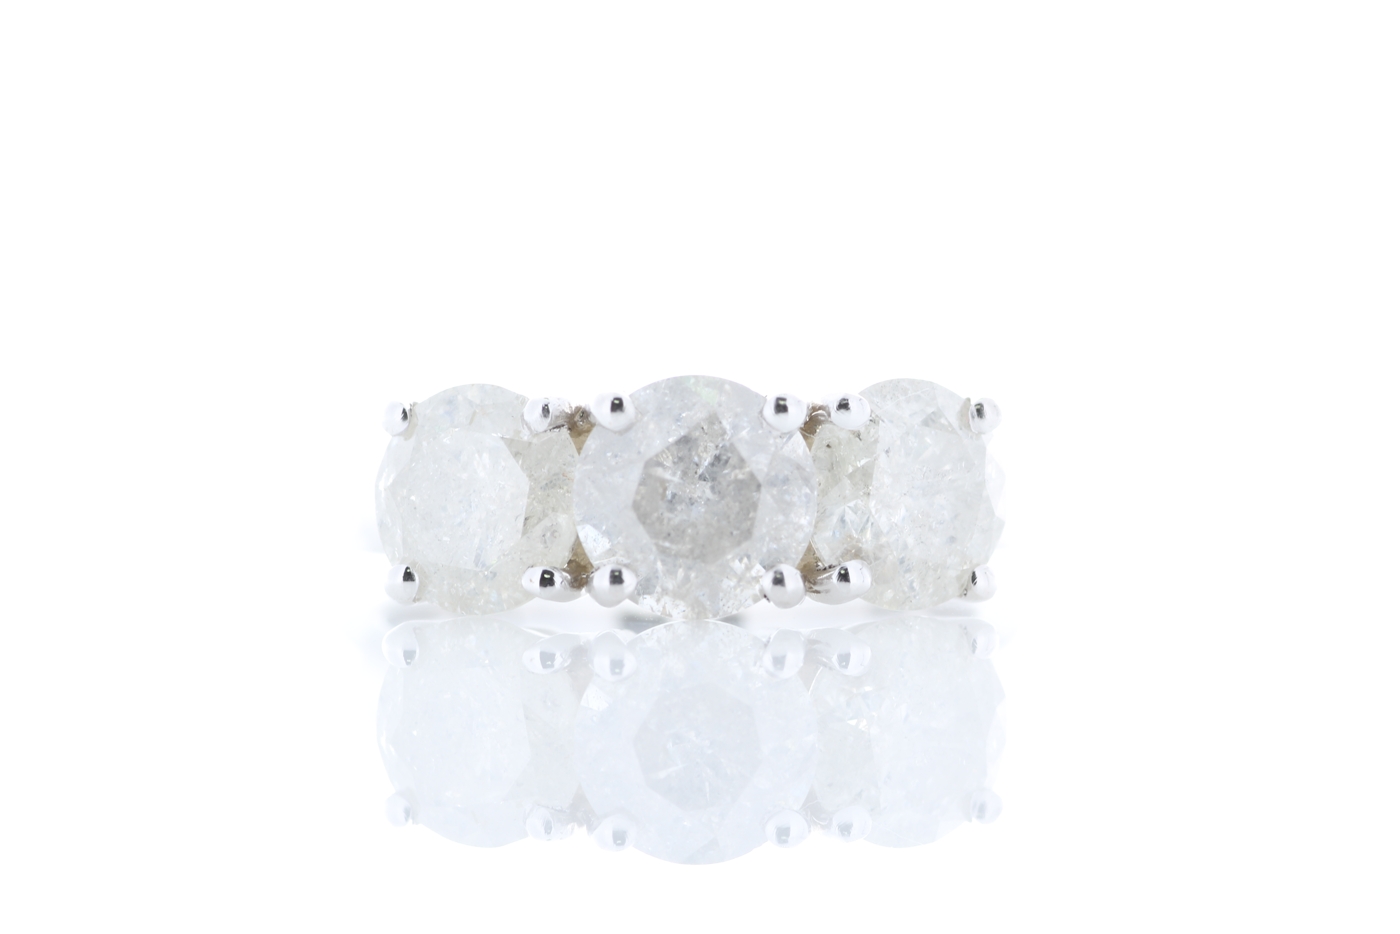 18k White Gold Three Stone Diamond Ring 3.45 Carats - Image 2 of 4